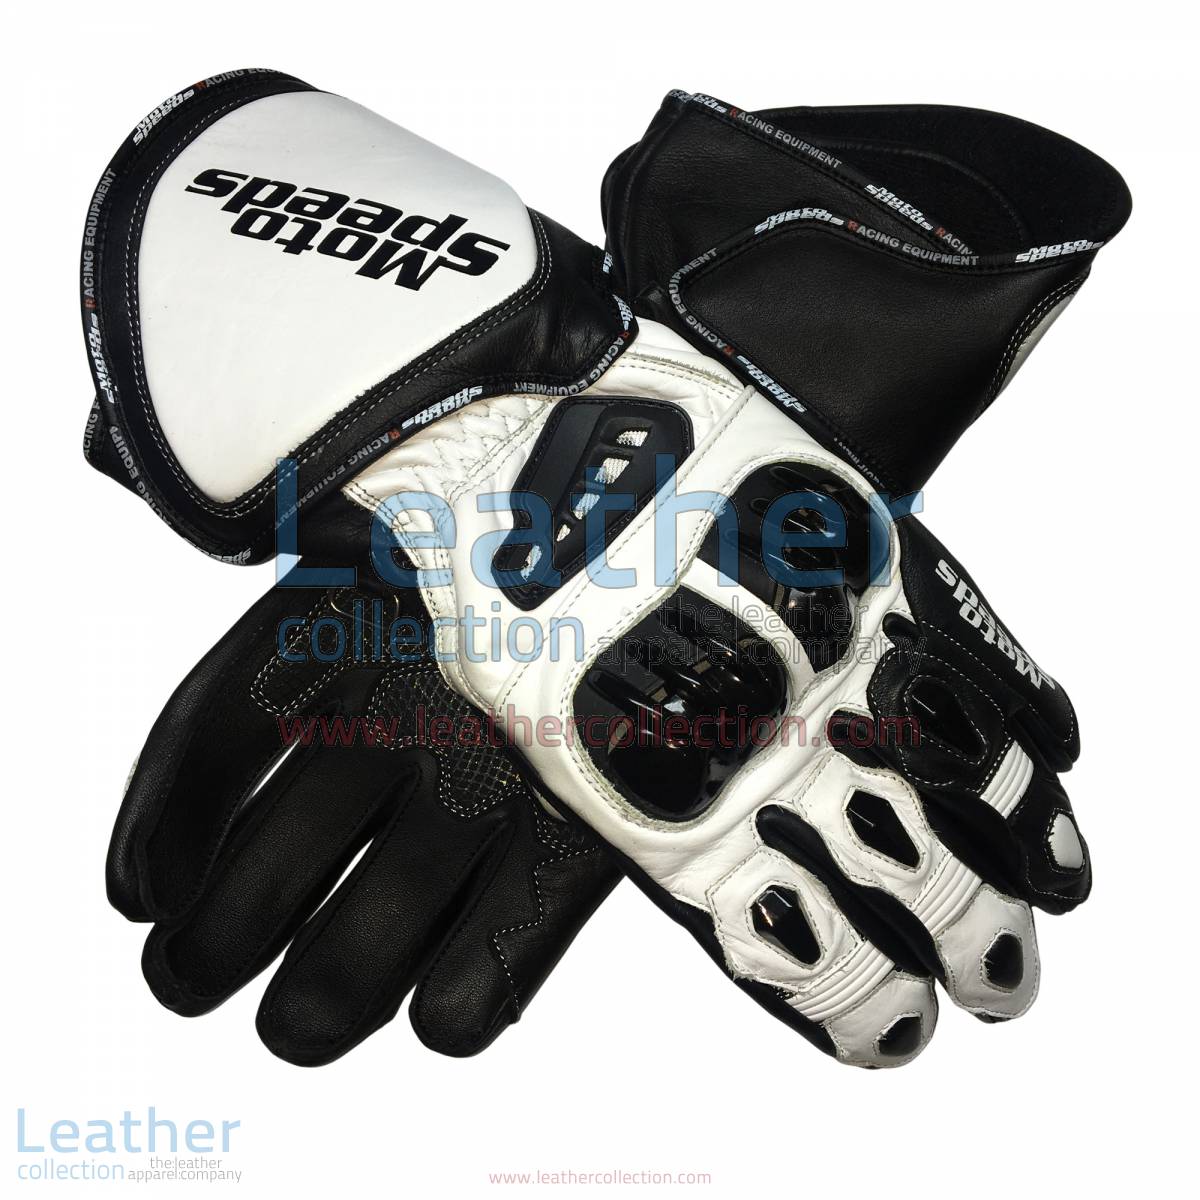 Alex Rins MotoGP 2017 Leather Gloves